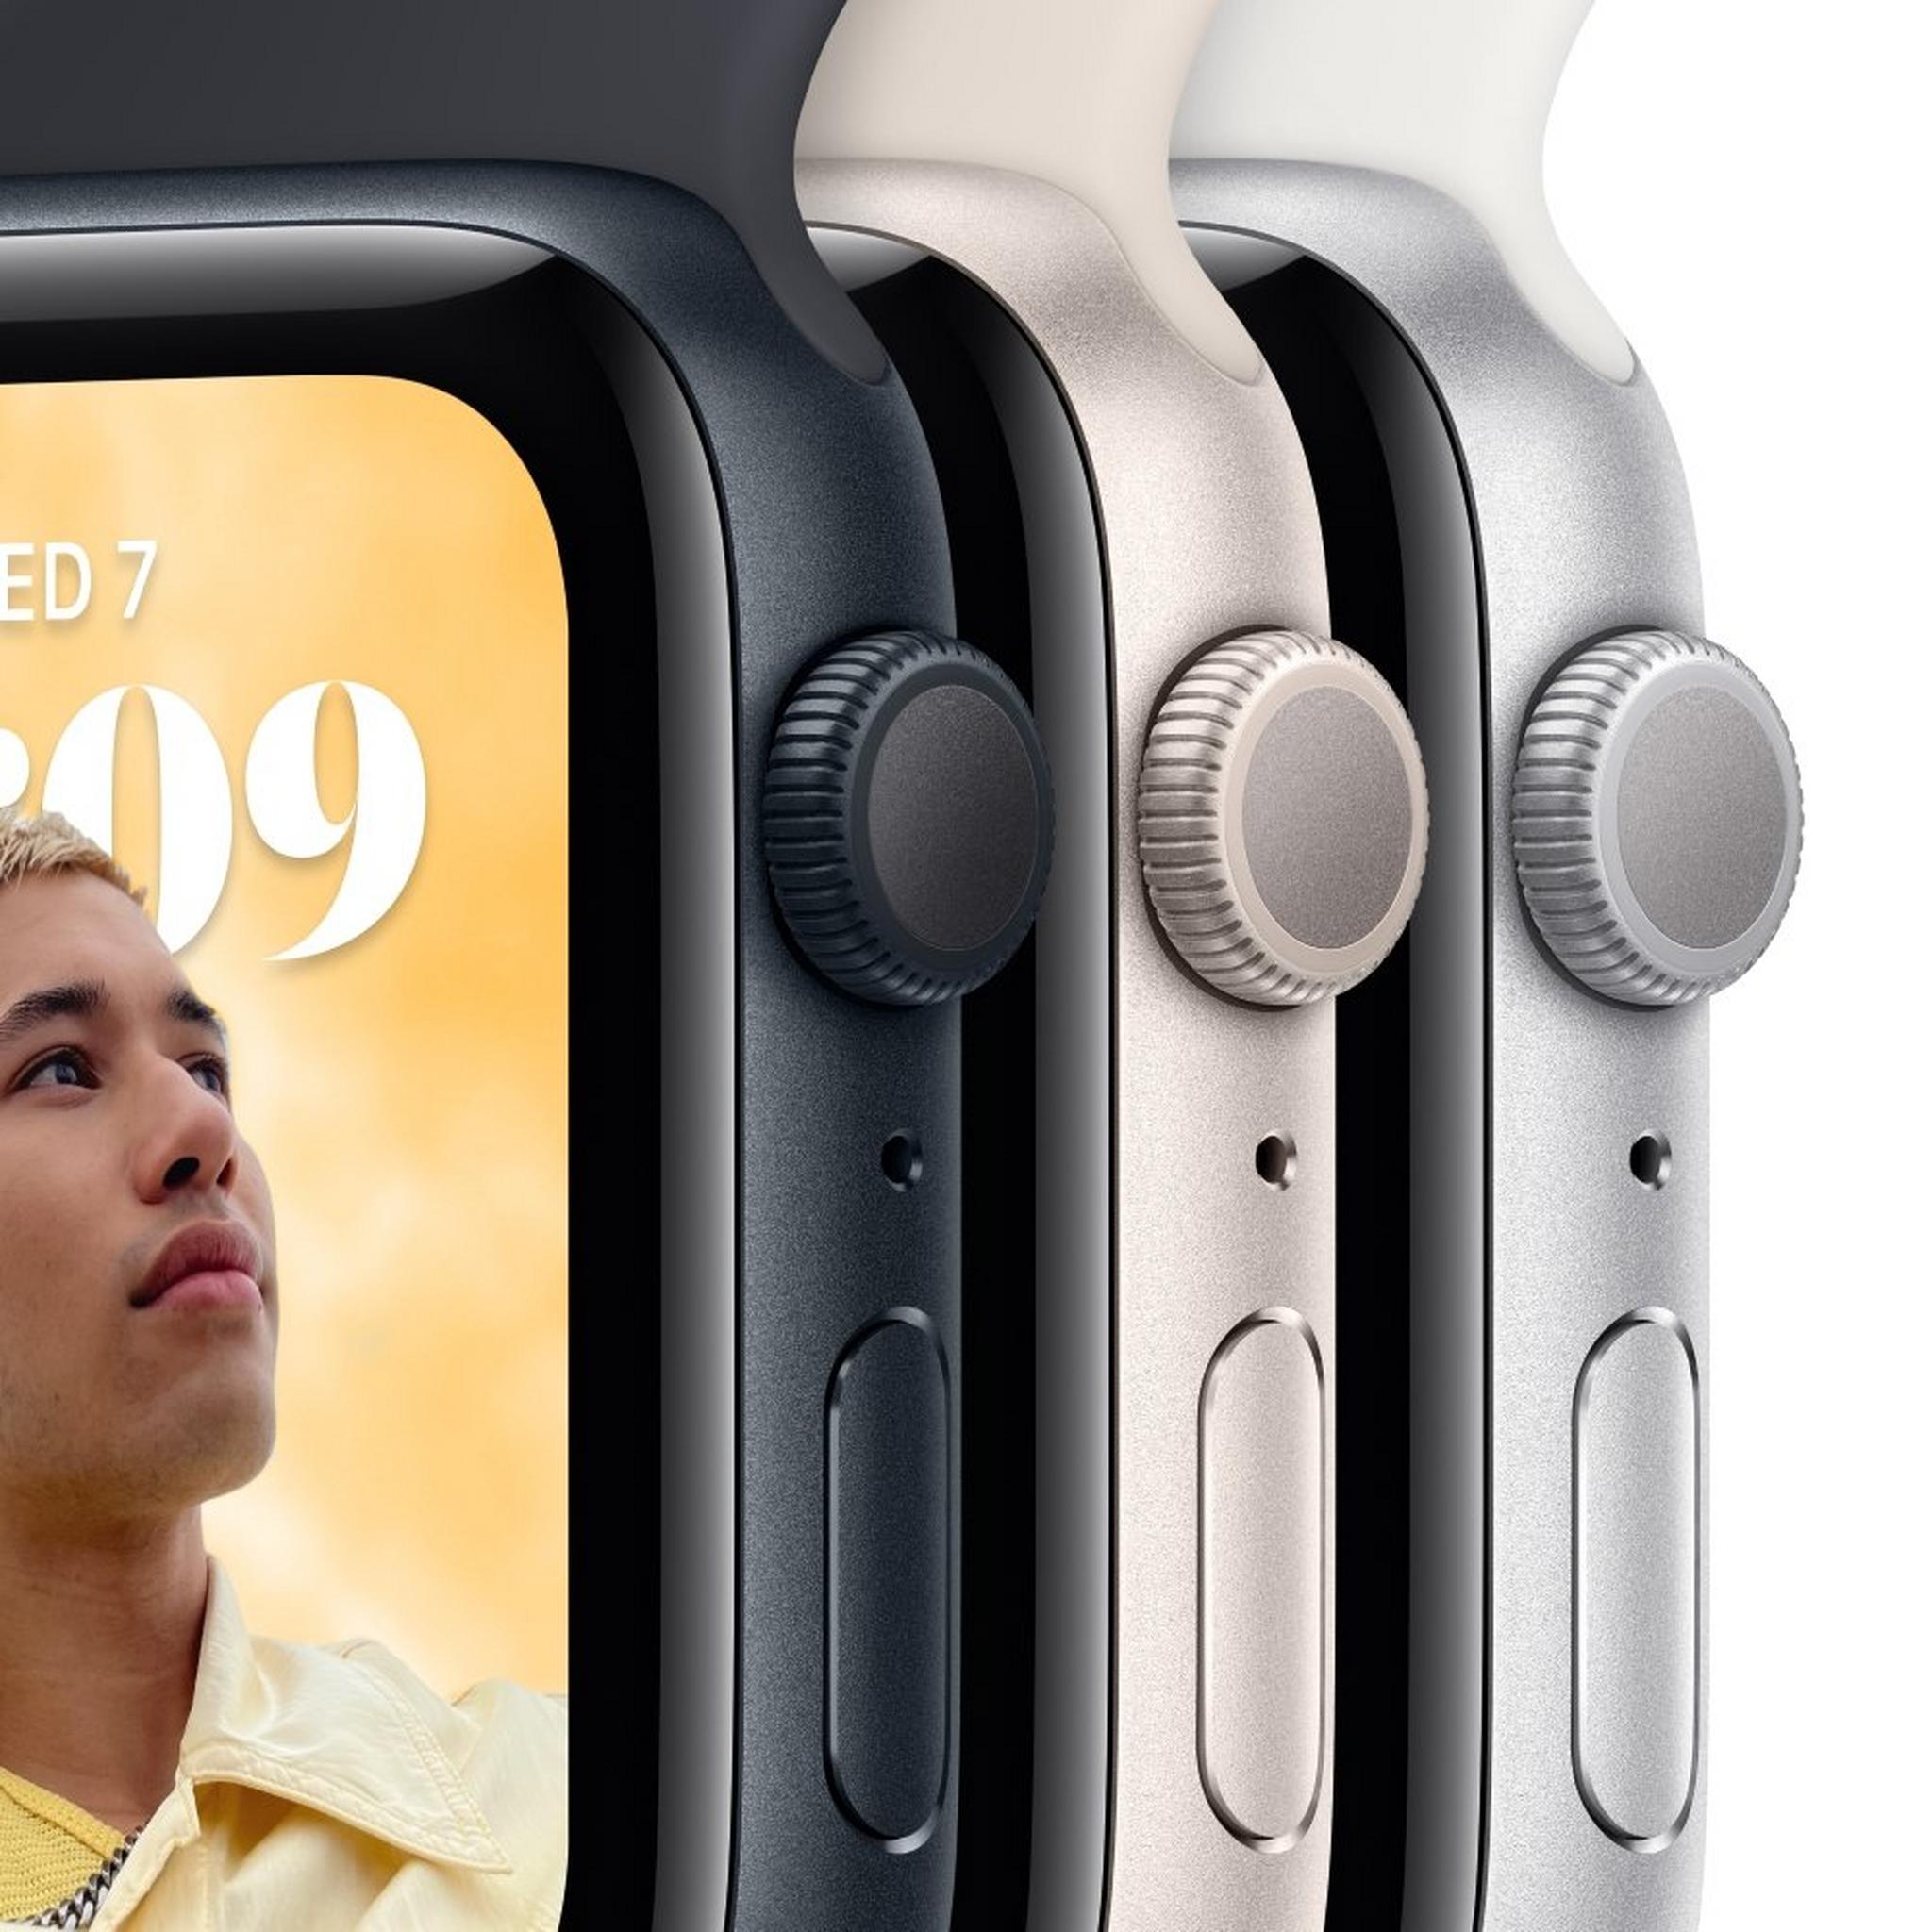 Apple Watch SE GPS + Cellular 40mm Midnight Aluminium Case with Midnight Sport Band - Regular